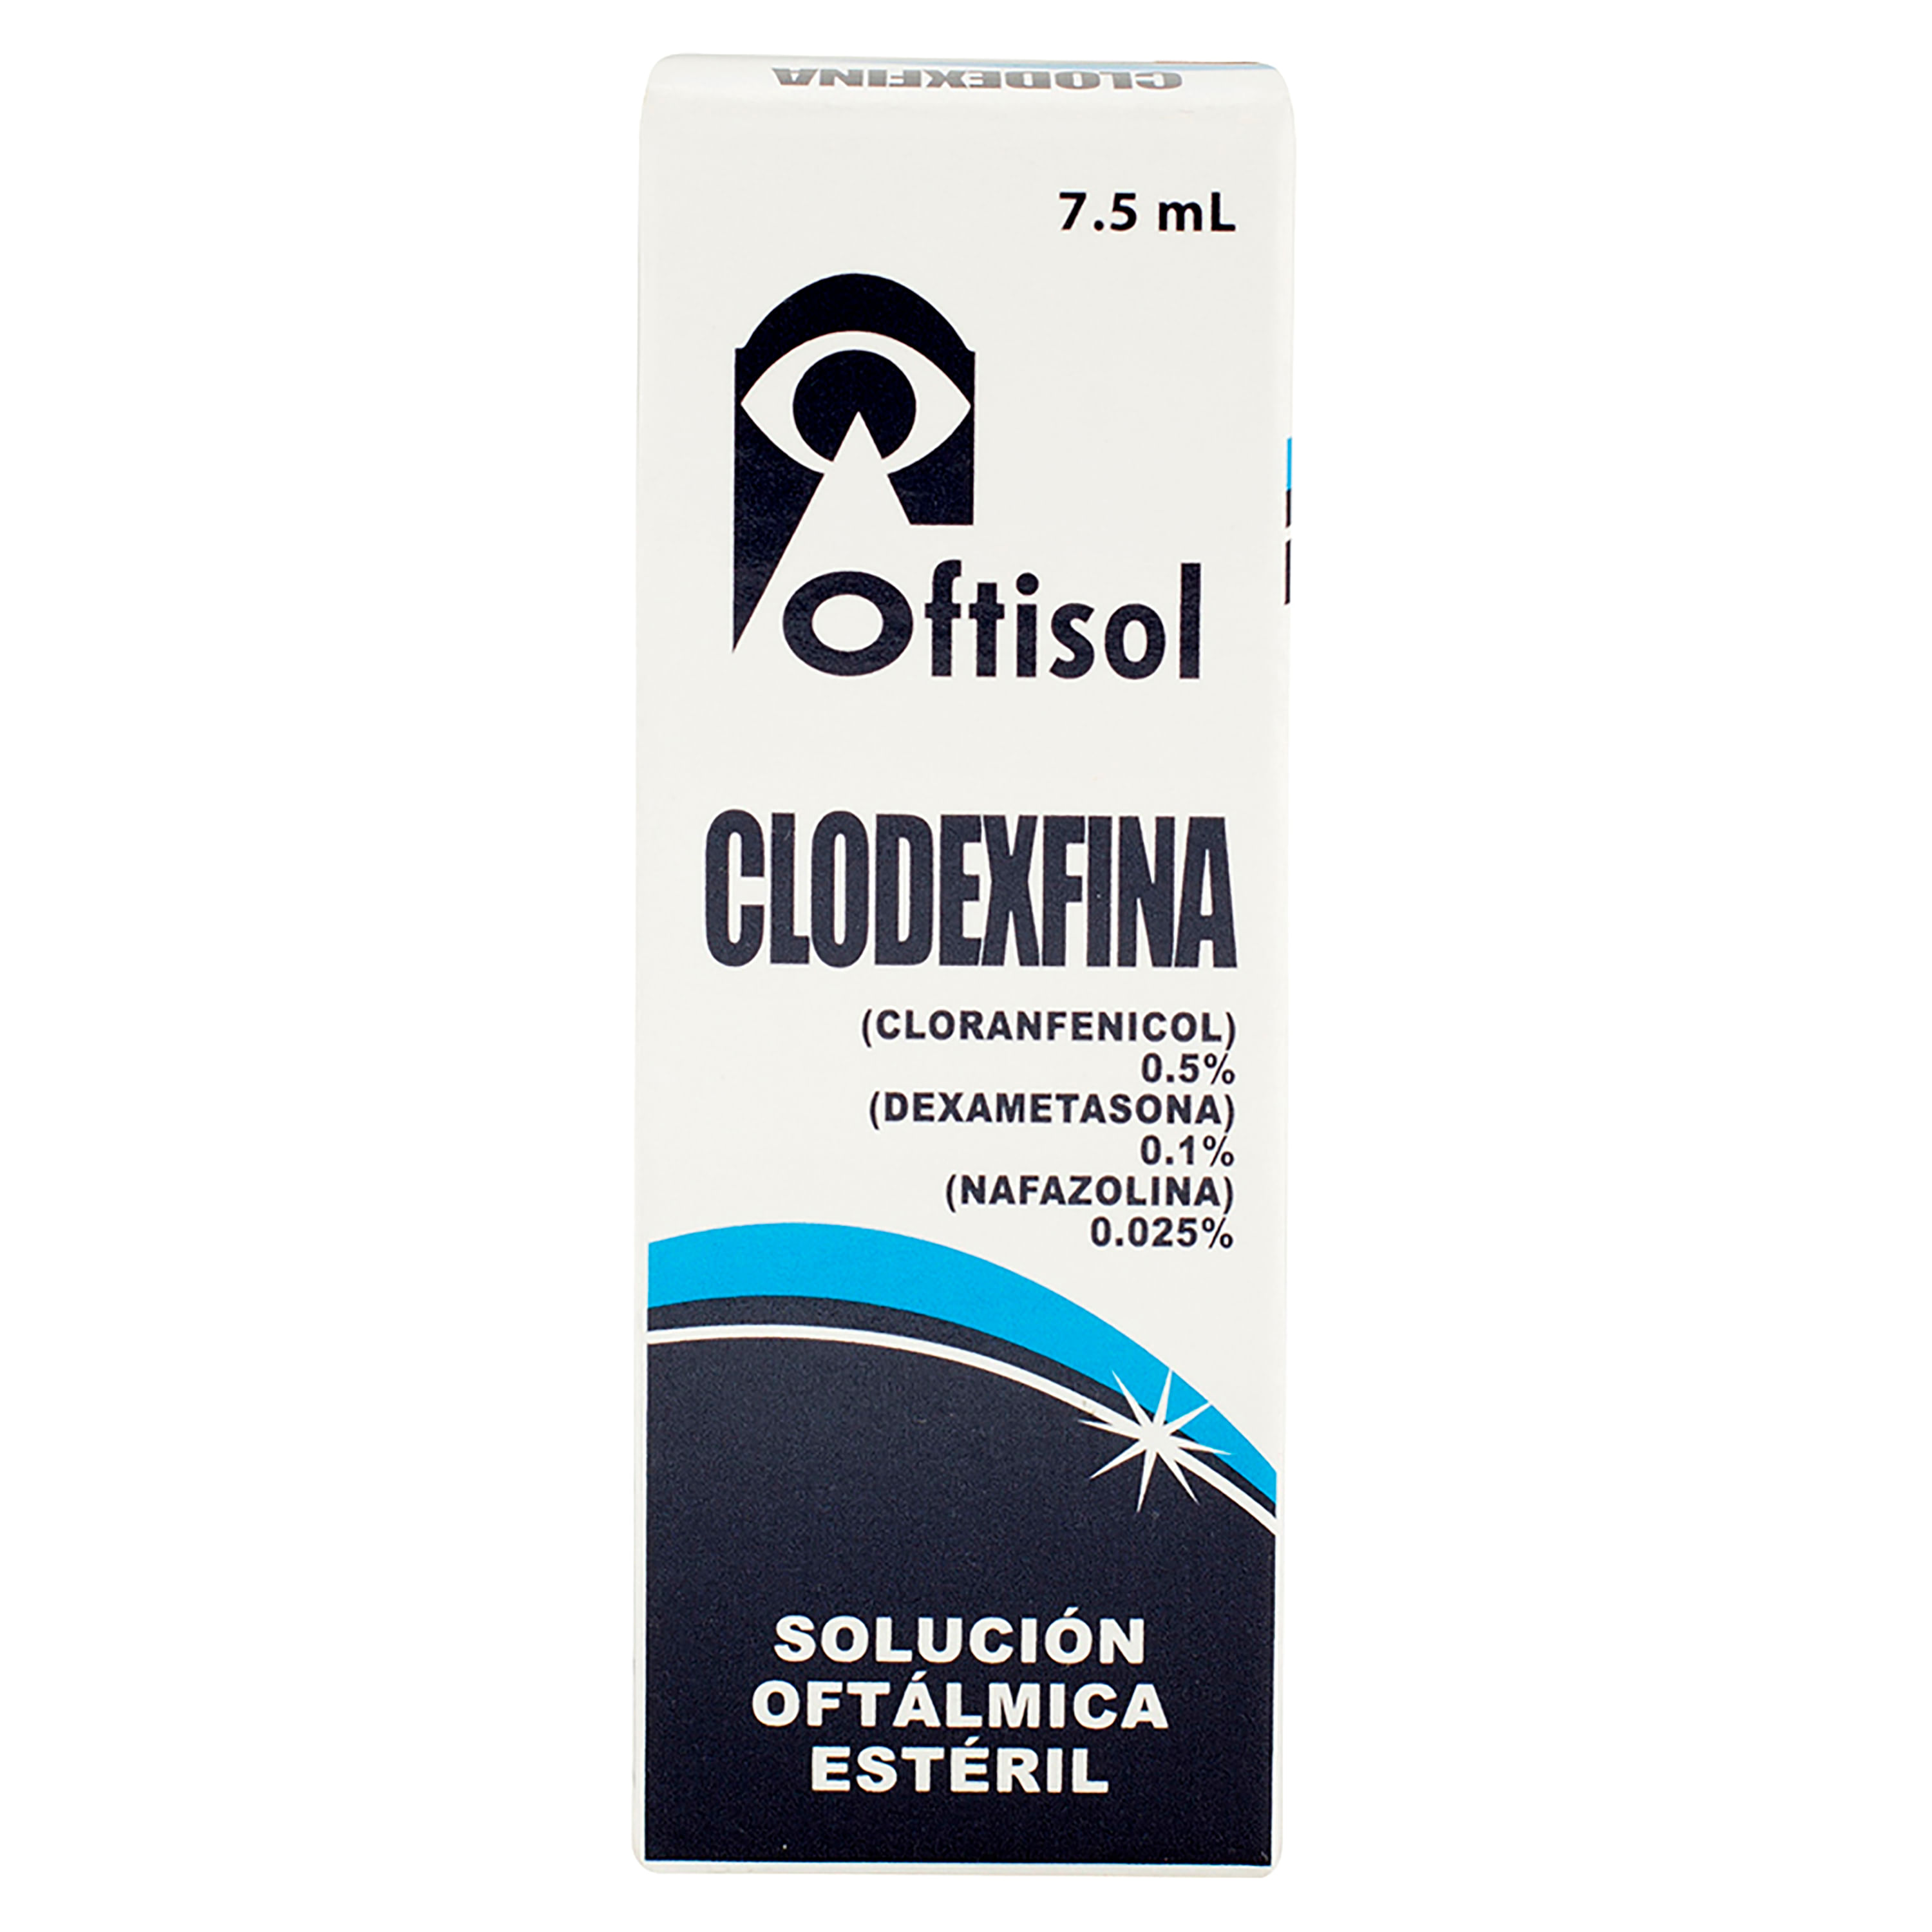 Clodexfina-Colirio-7-5Ml-Una-Caja-Clodexfina-Colirio-7-5Ml-1-31800